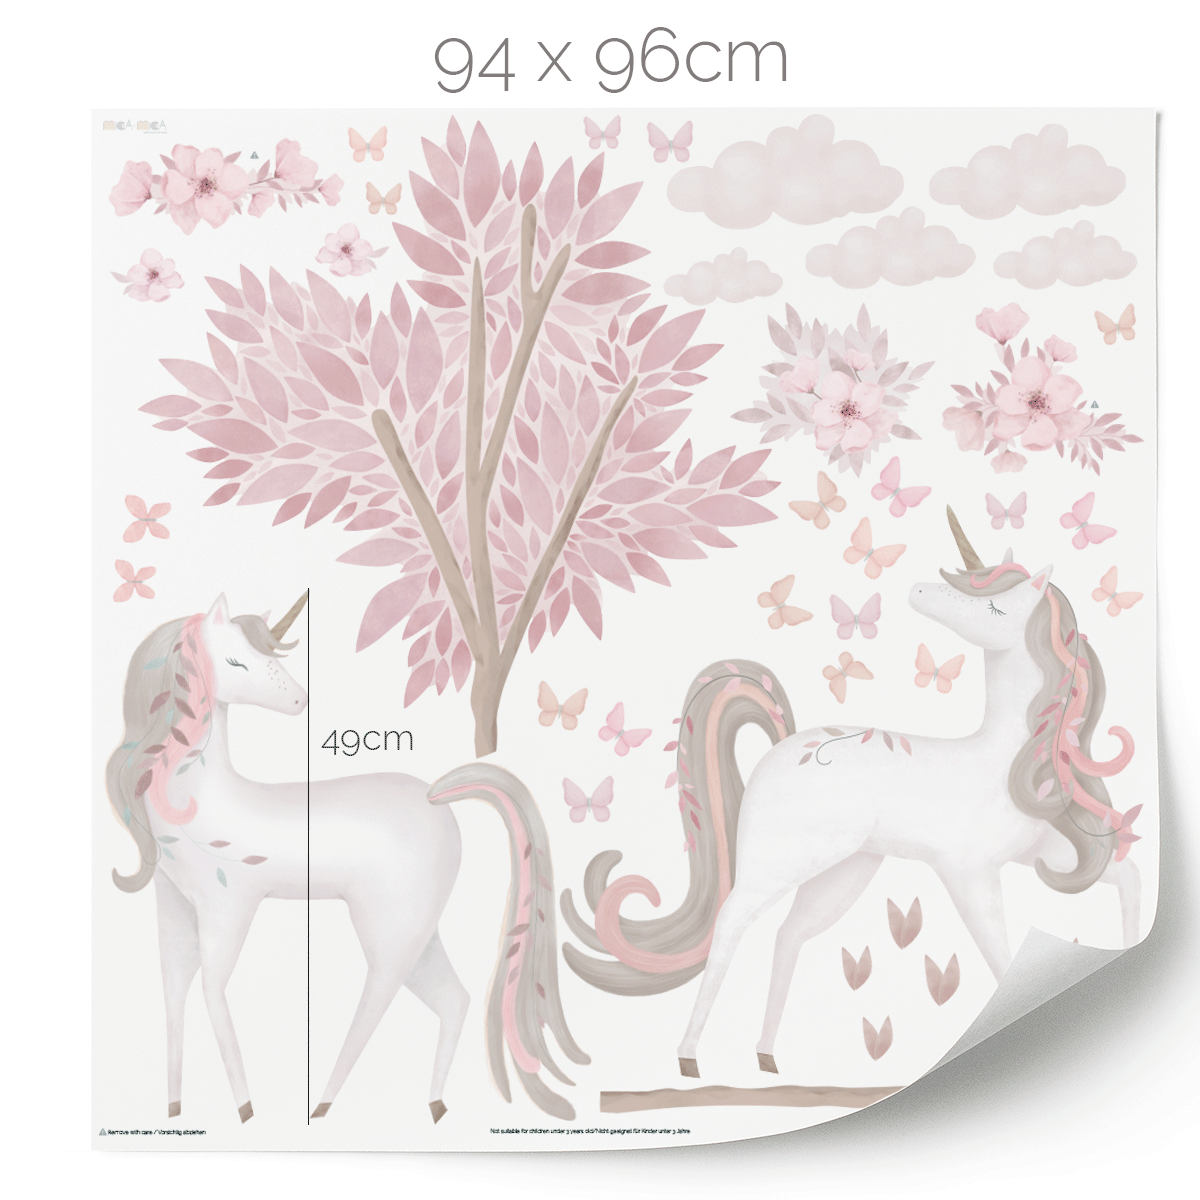 Unicorn wall stickers - Magical unicorns with tree